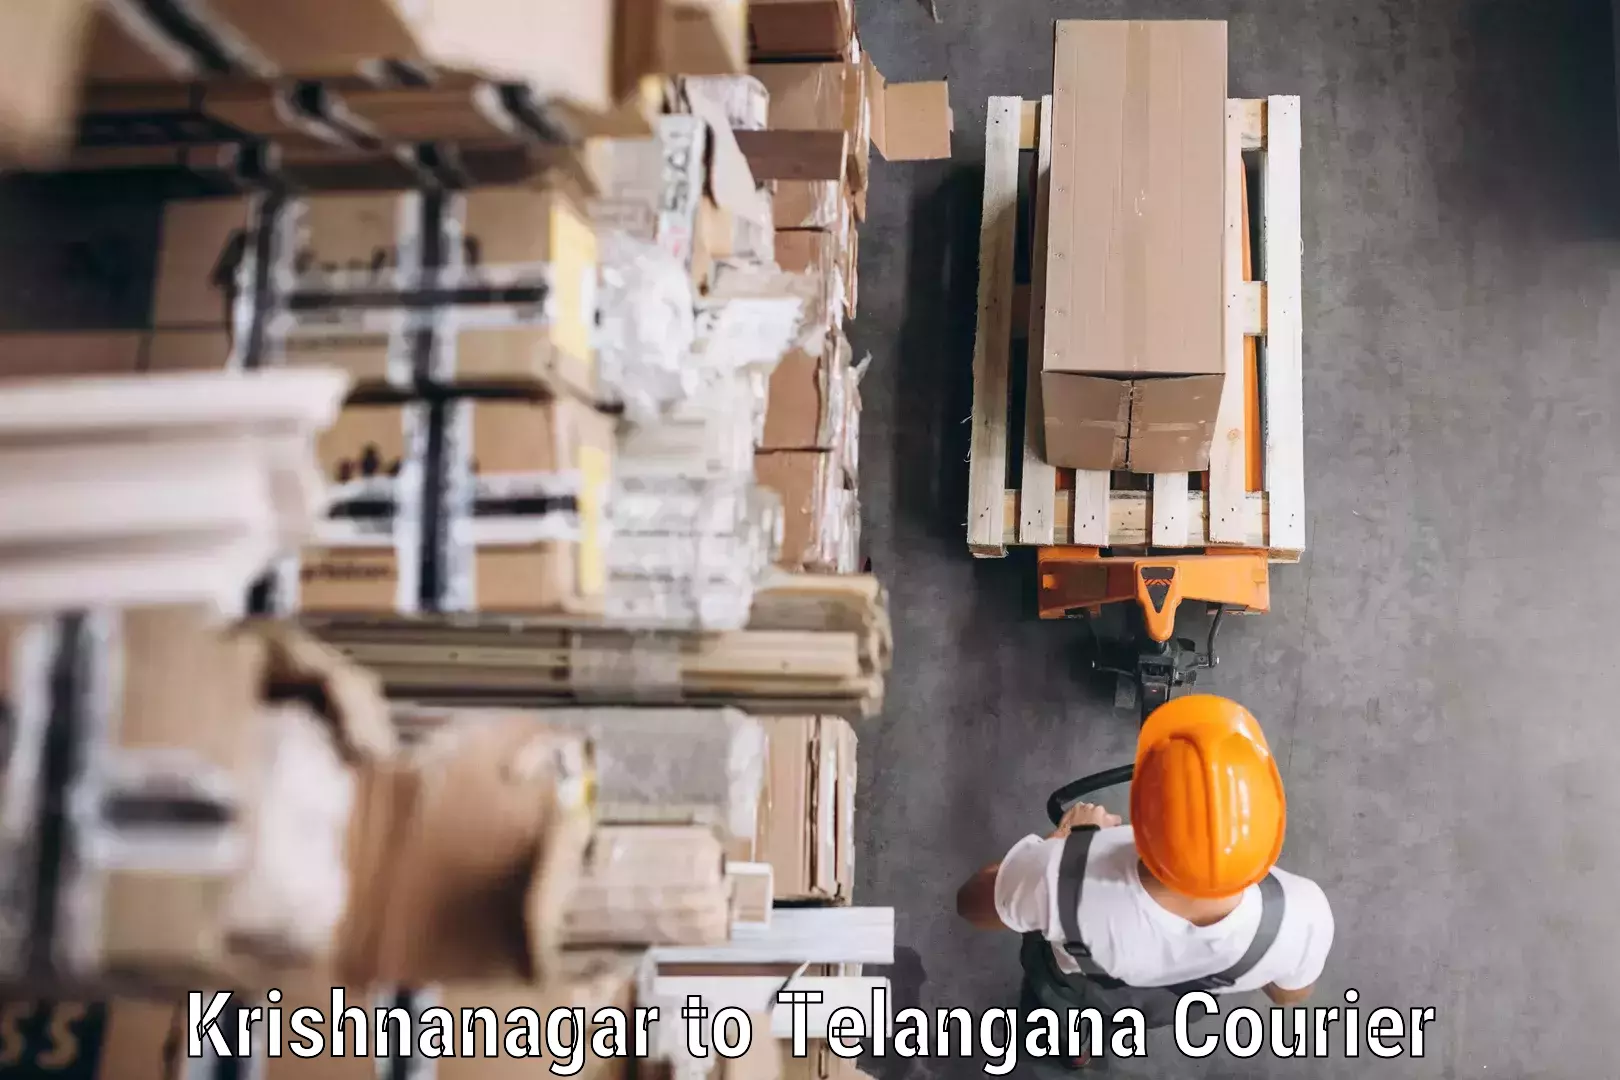 Global shipping networks Krishnanagar to Sangareddy